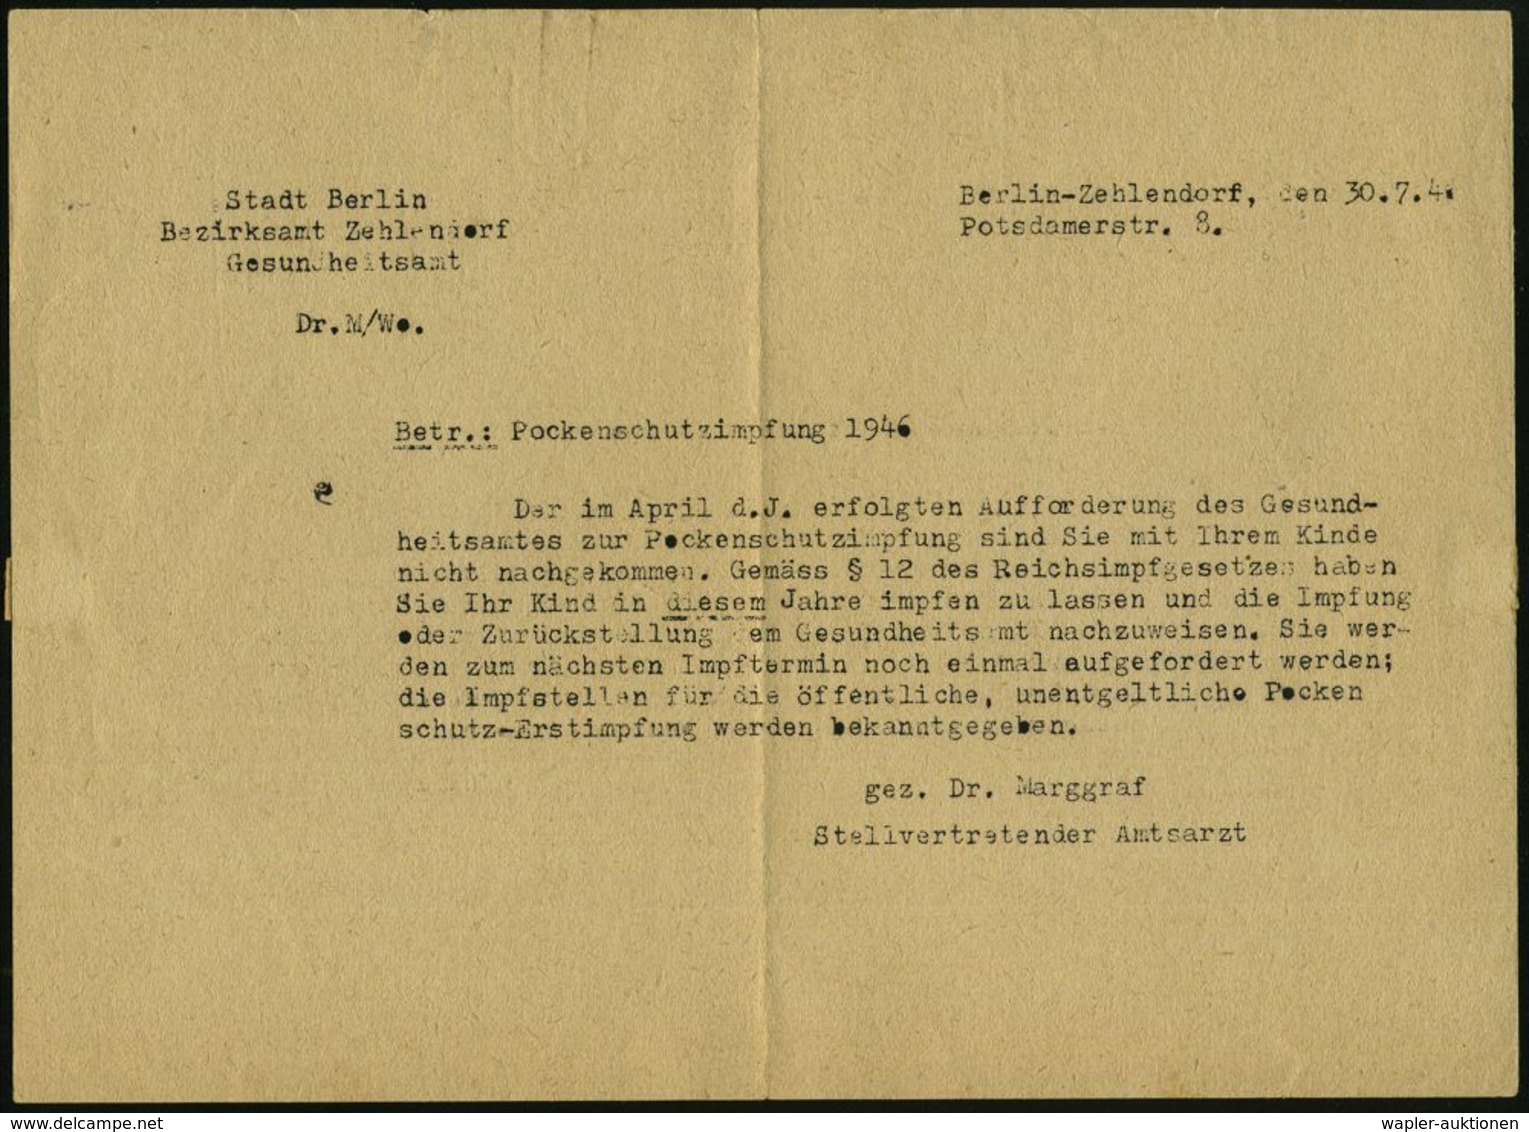 SEUCHEN / EPEDEMIE-BEKÄMPFUNG : BERLIN-ZEHLENDORF 1/ Stadt Berlin/ Bezirksamt/ Zehlendorf 1946 (Aug.) Seltener AFS-Typ " - Disease